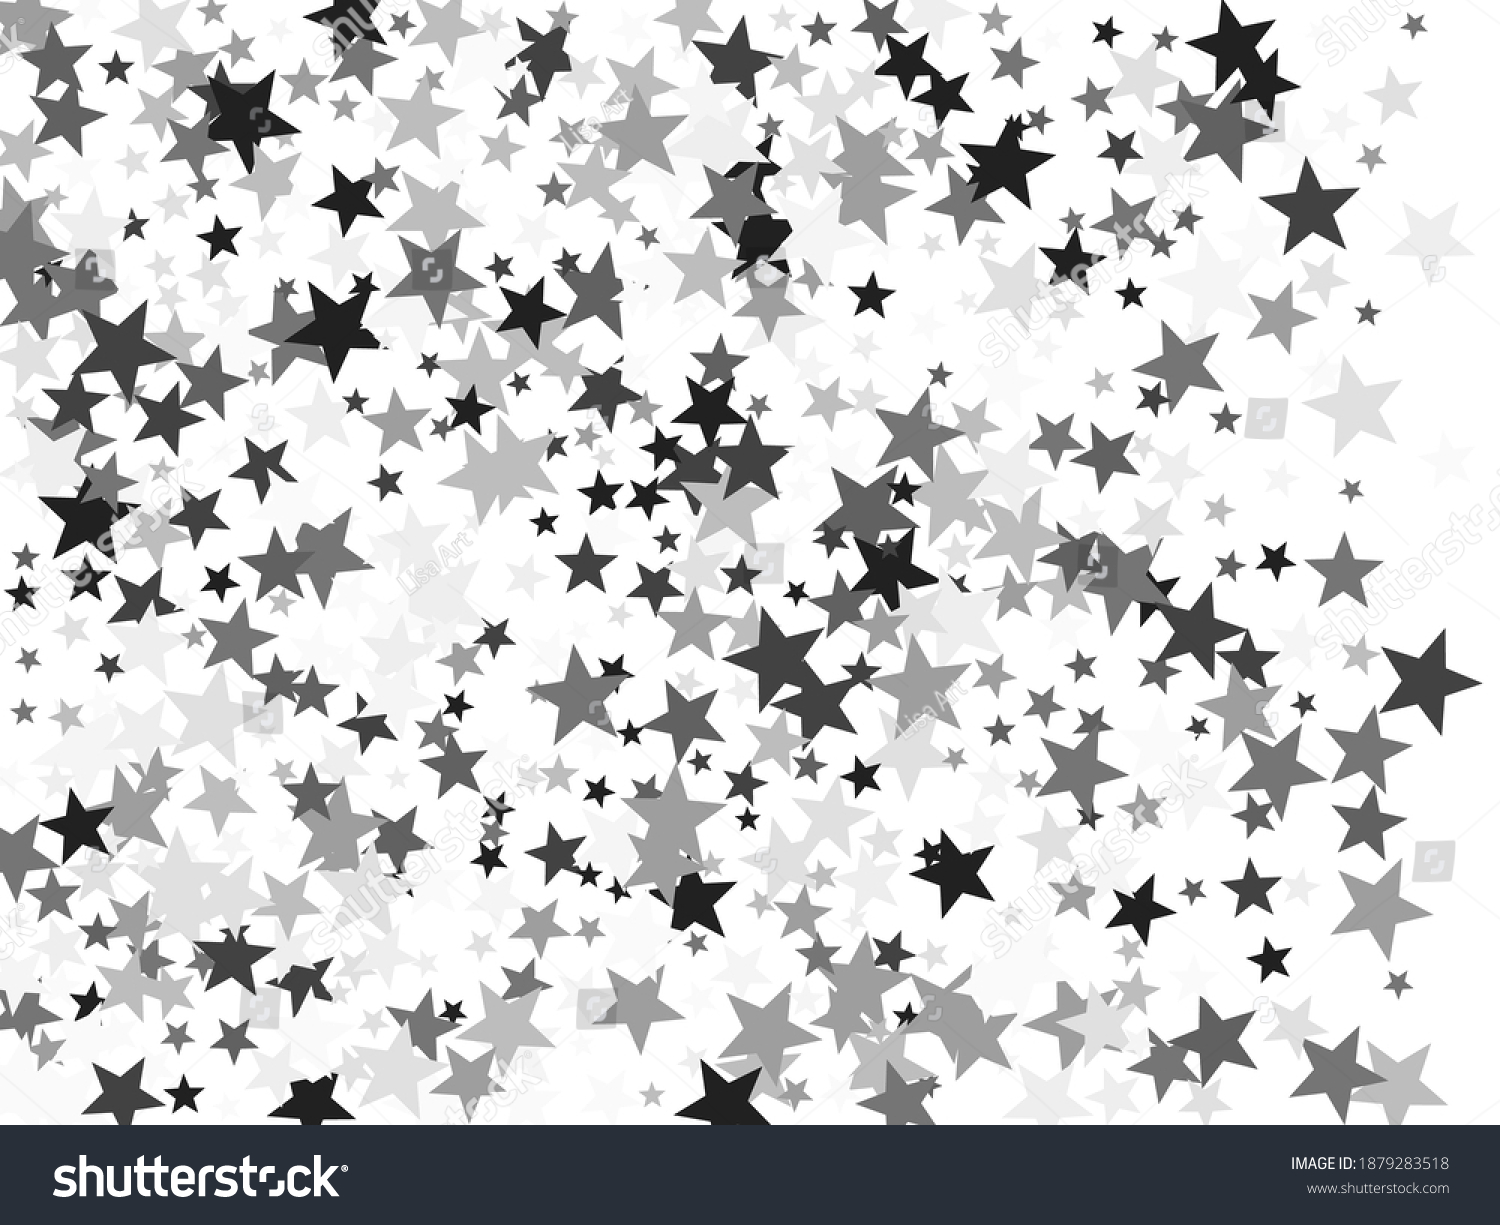 163,786 Grey star pattern Images, Stock Photos & Vectors | Shutterstock